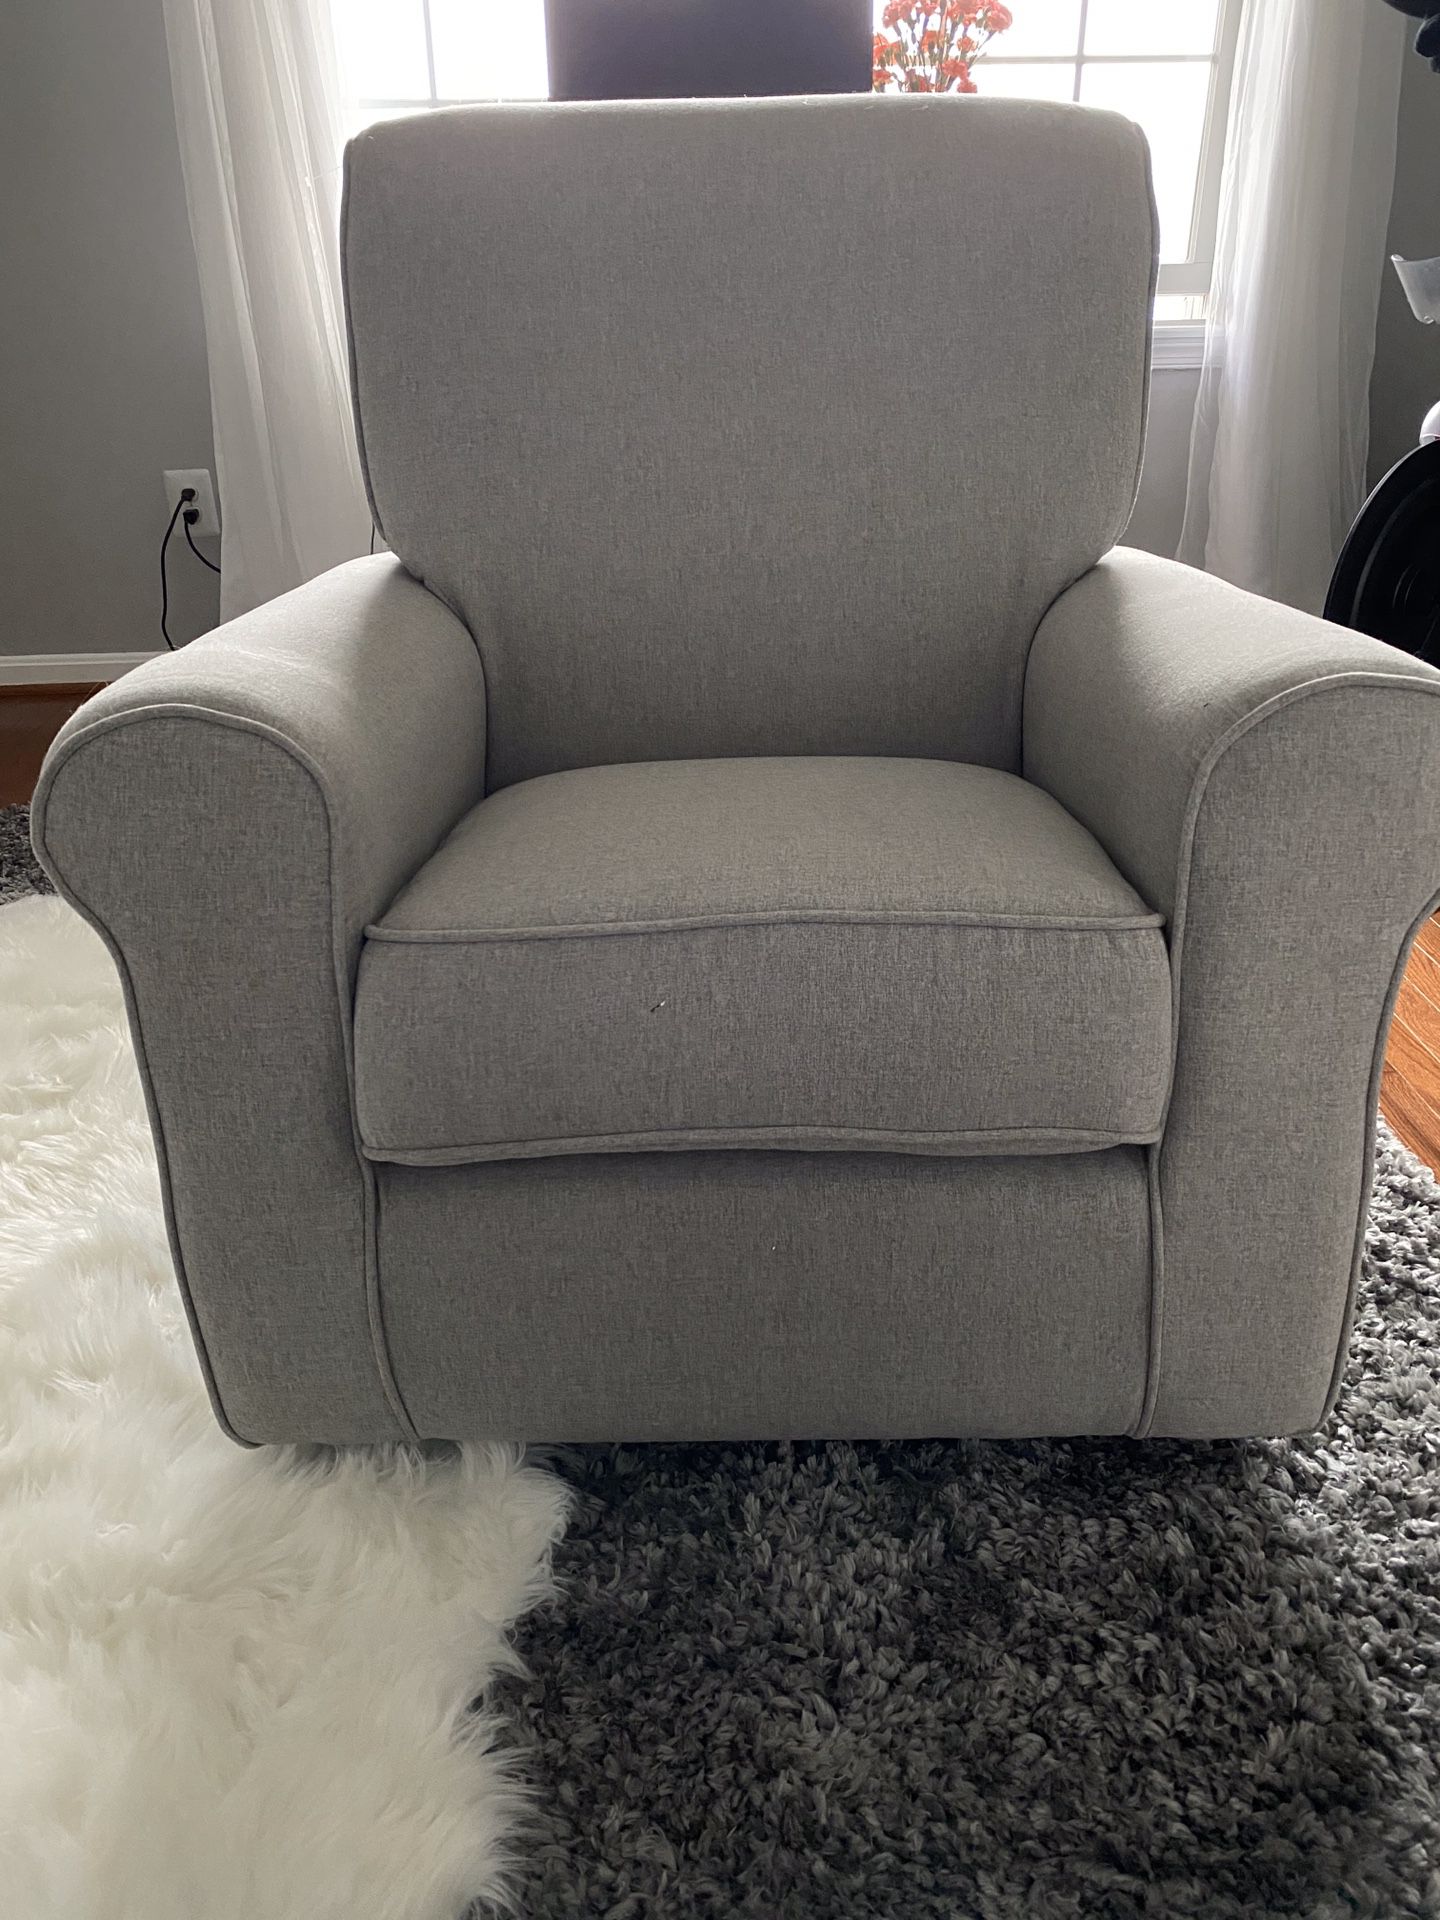 Brand new upholstered glider chair